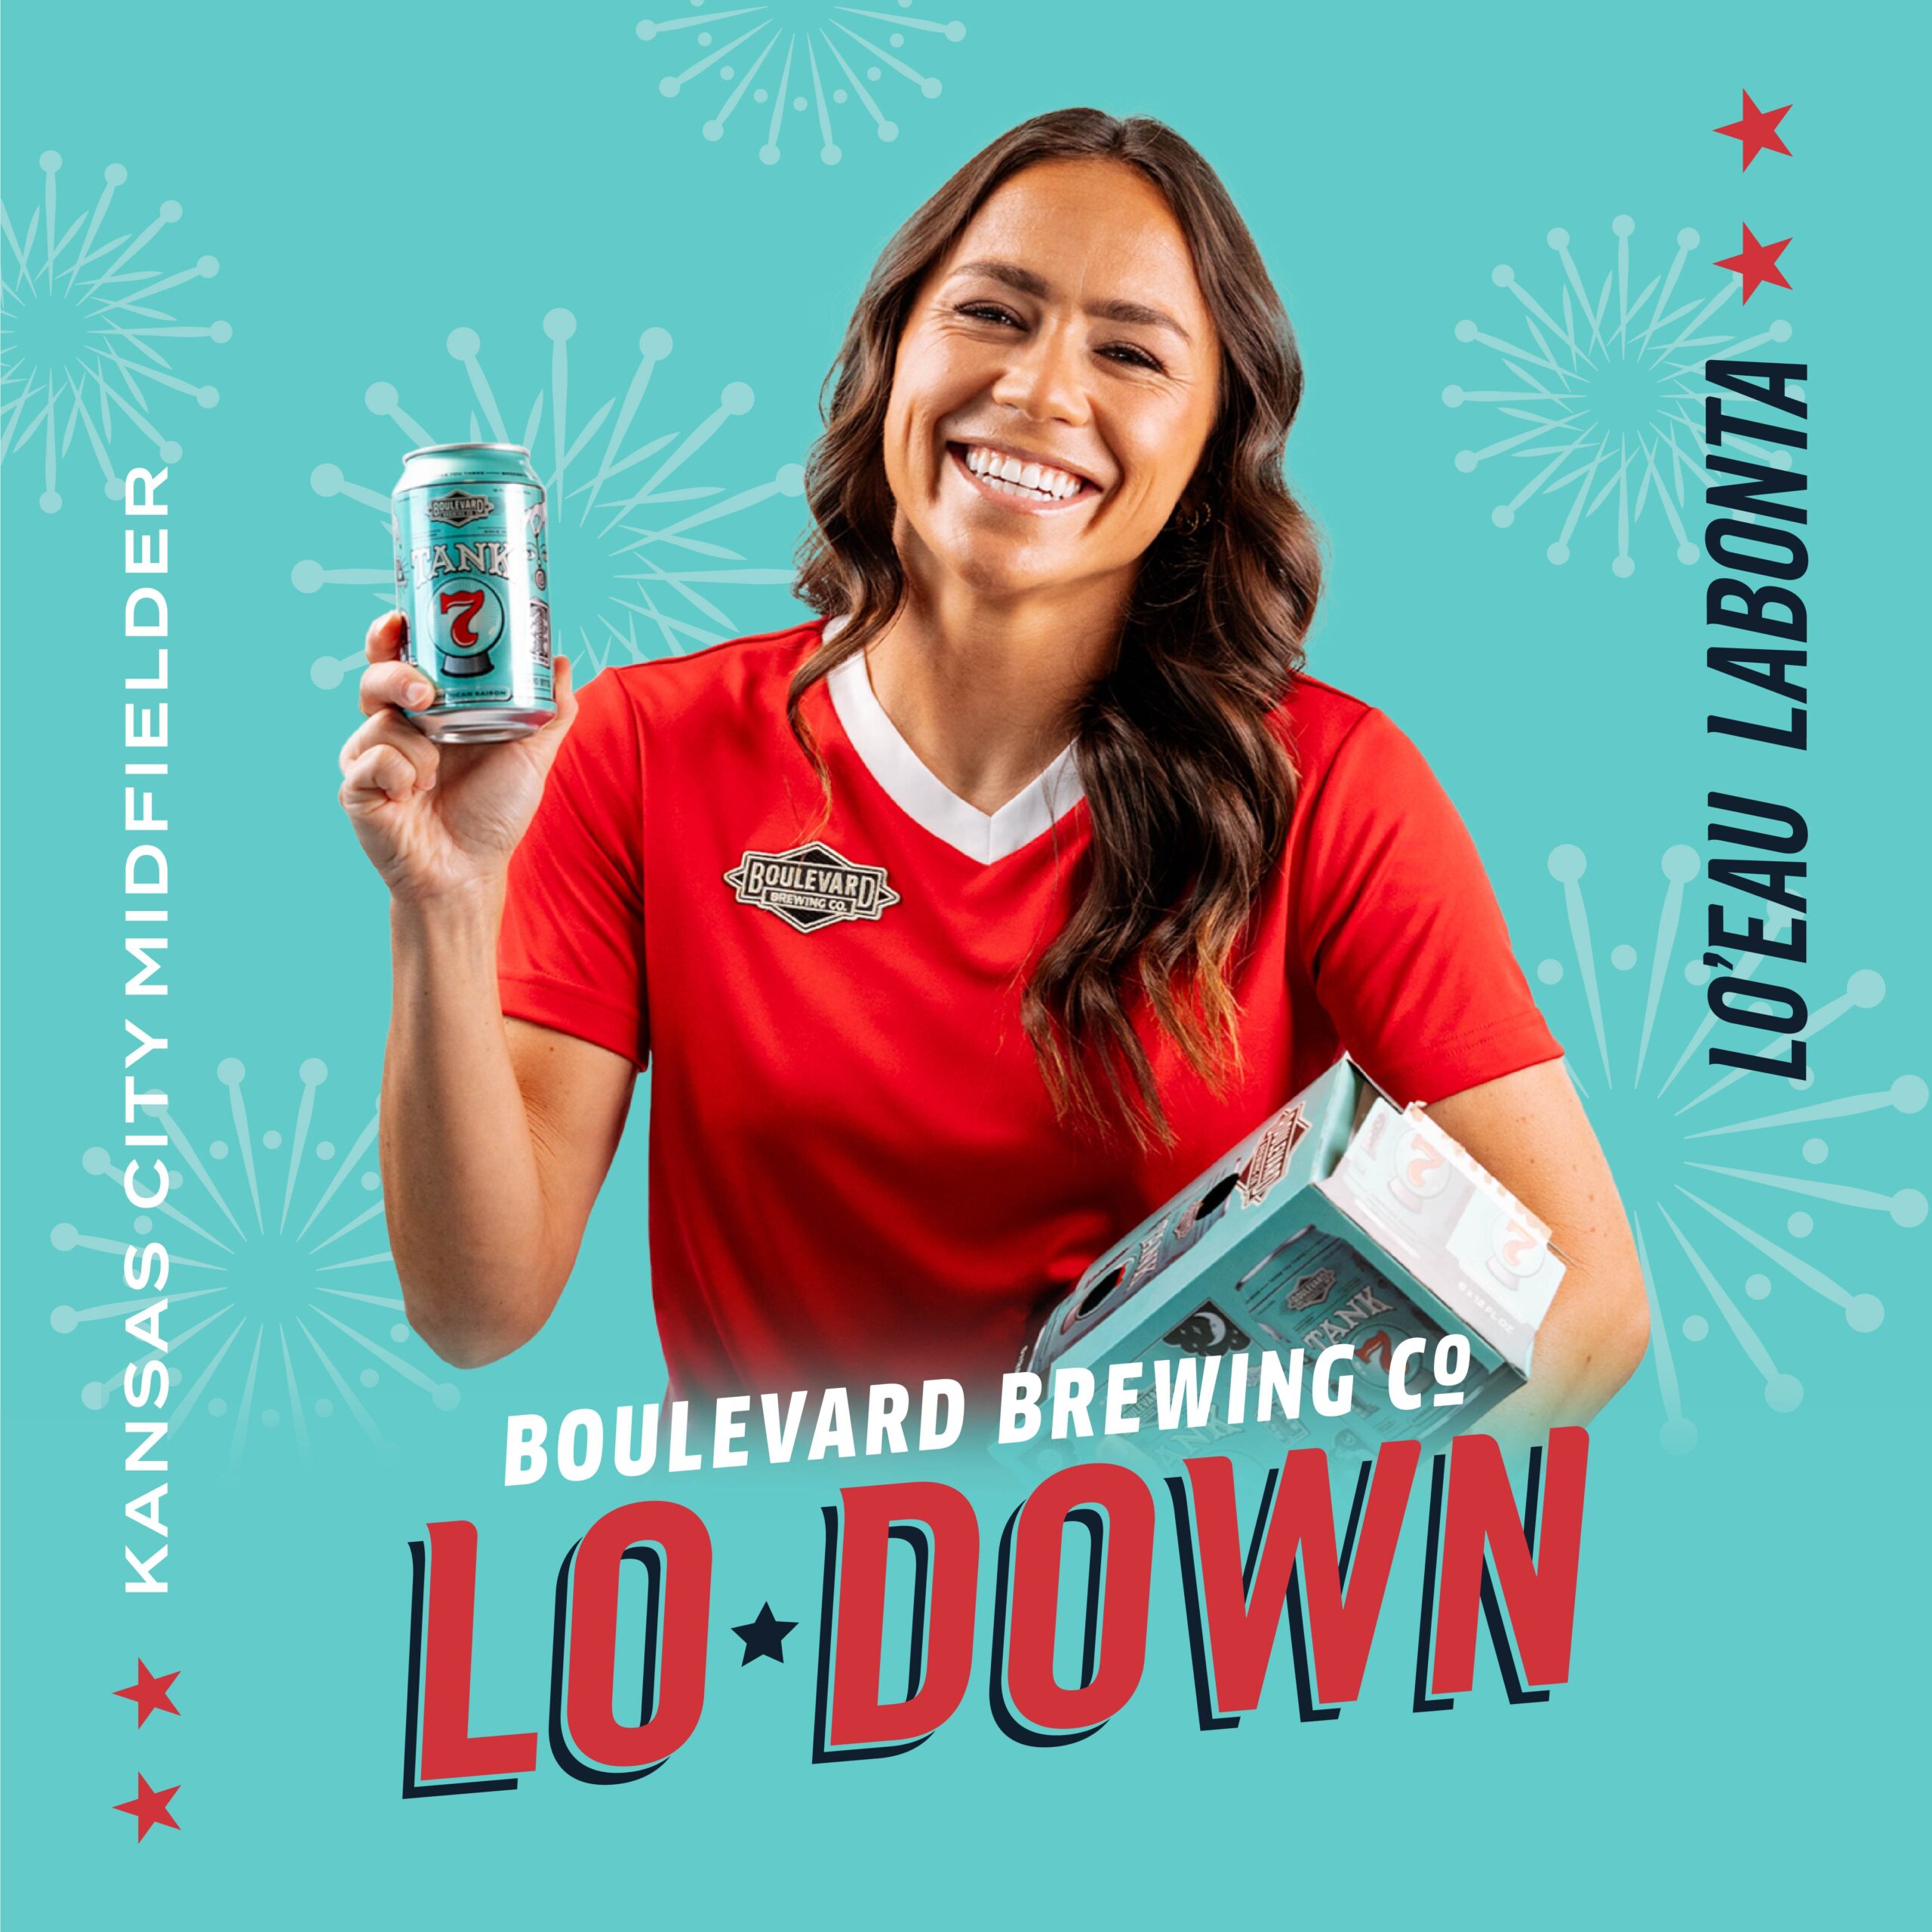 Boulevard Brewing Co. Scores Big, Announcing Lo’eau LaBonta, Kansas City Current Midfielder, as New Brand Ambassador